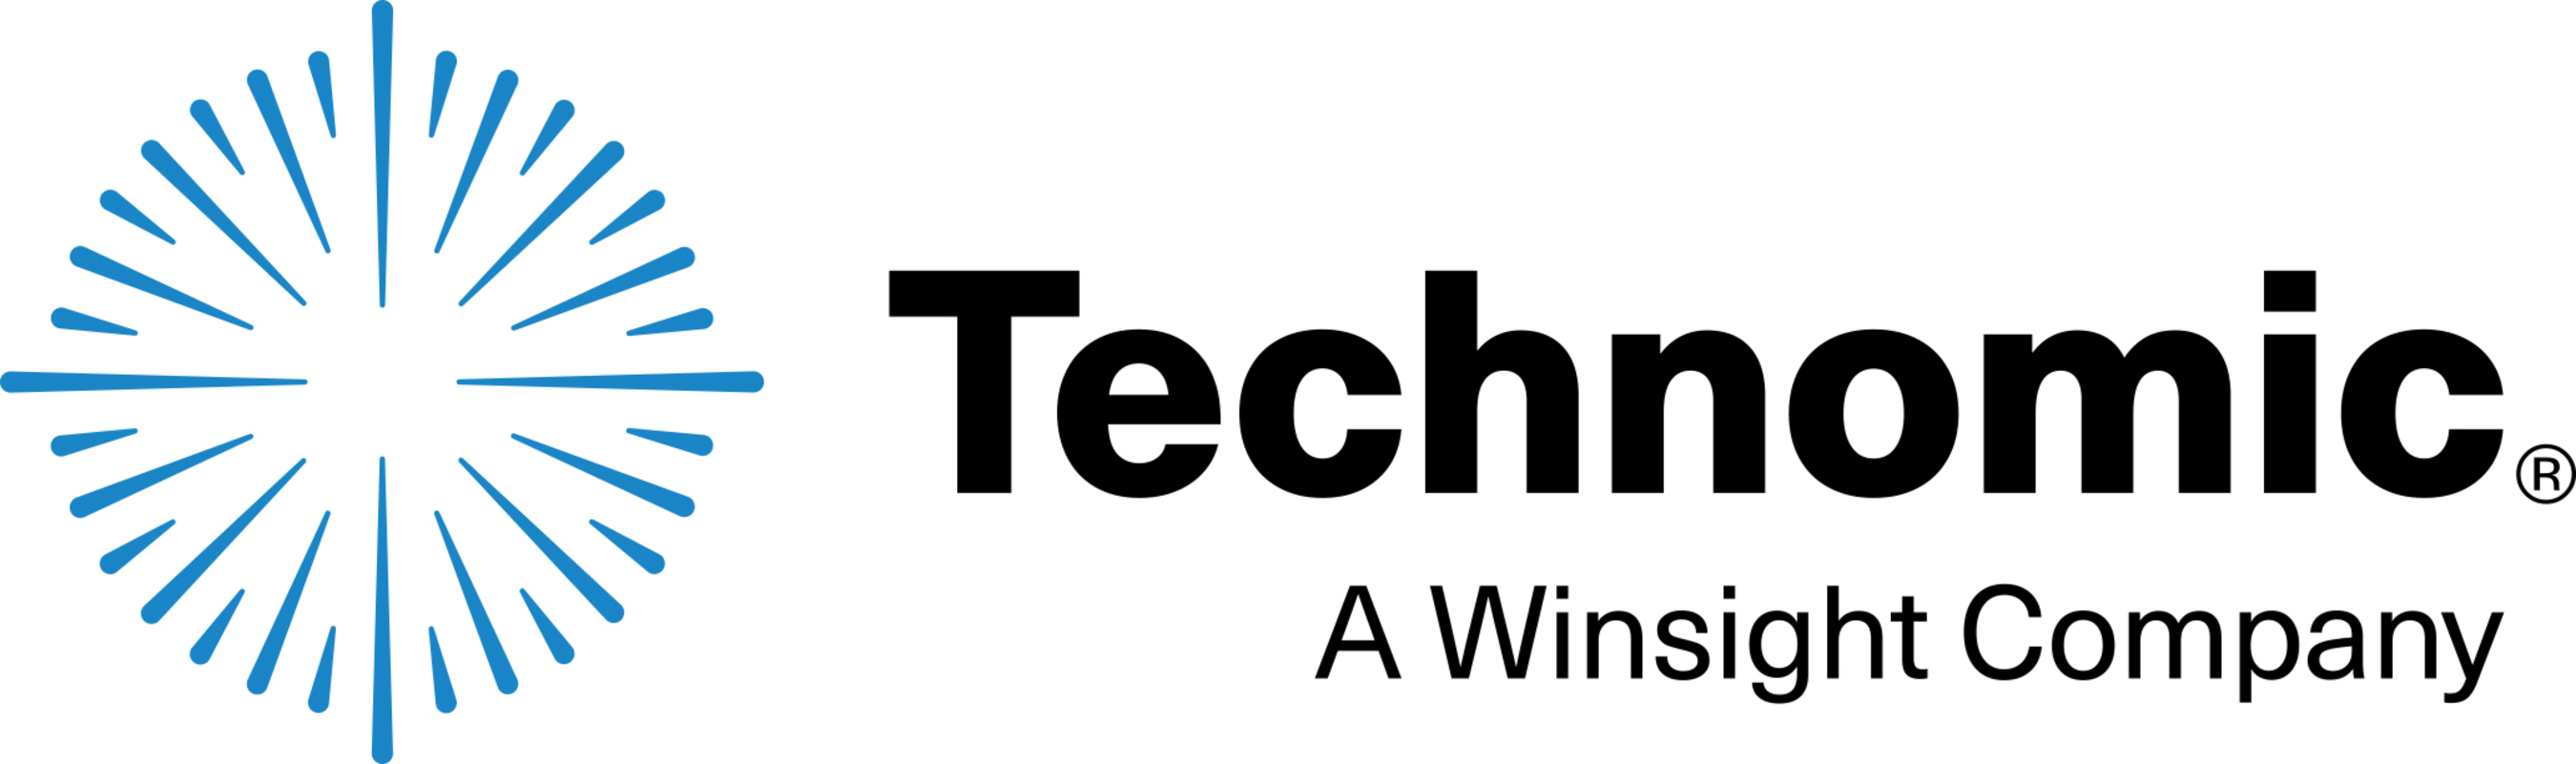 Technomic Inc. Logo. (PRNewsFoto/Technomic)